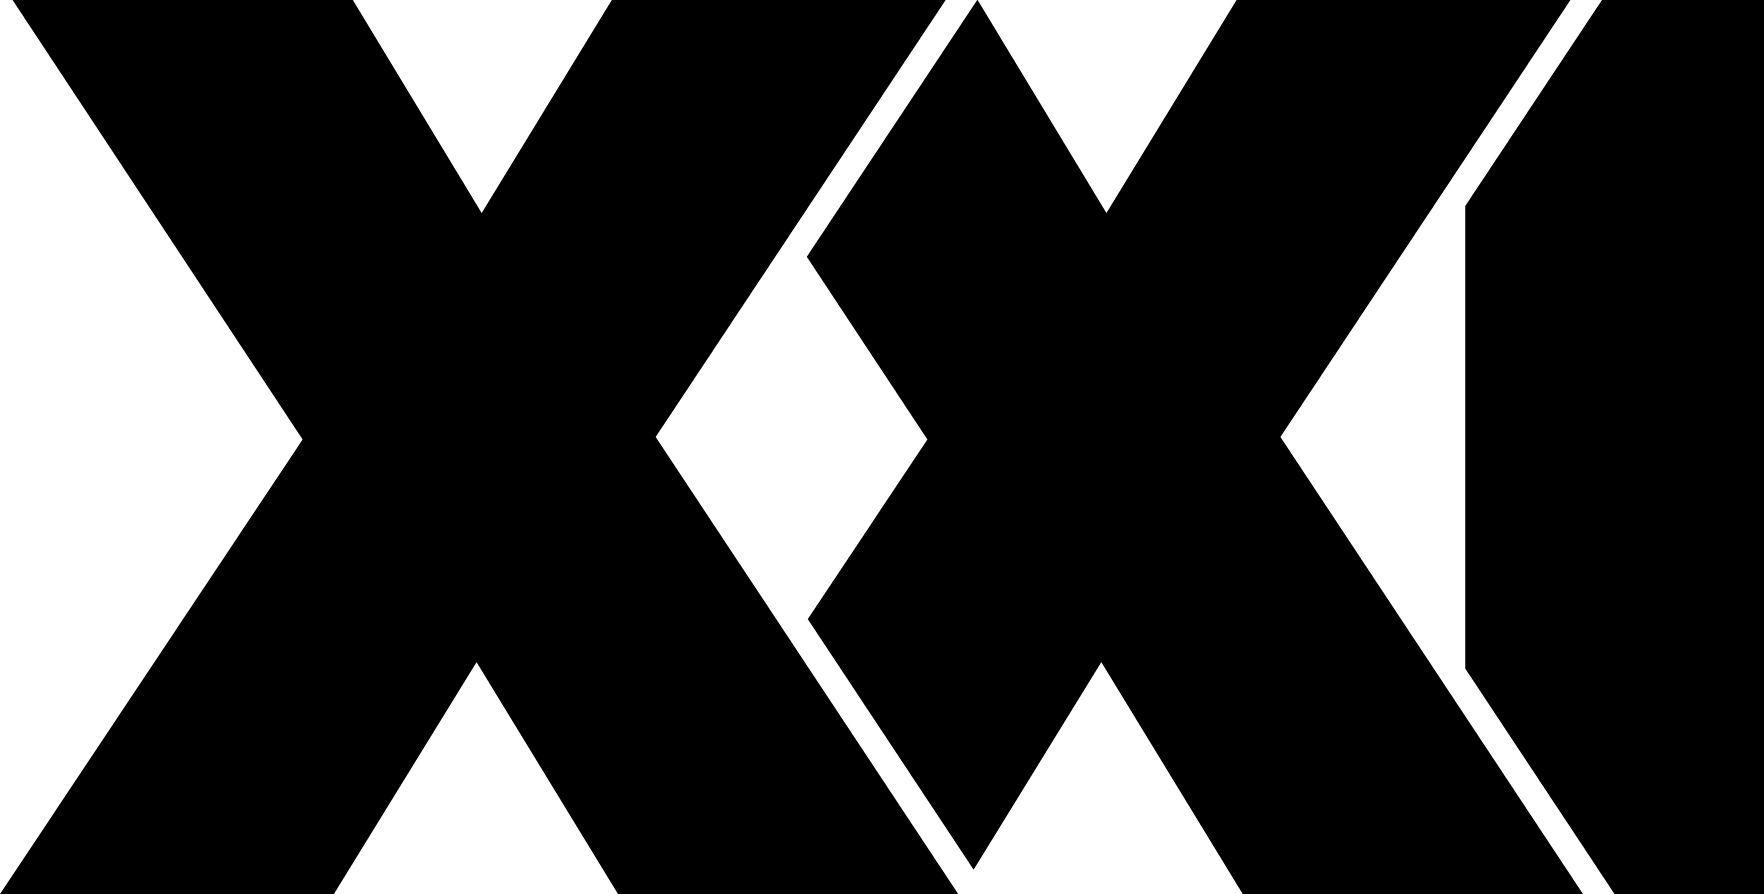 XXI Logo - File:Xxi logo.jpg - Wikimedia Commons